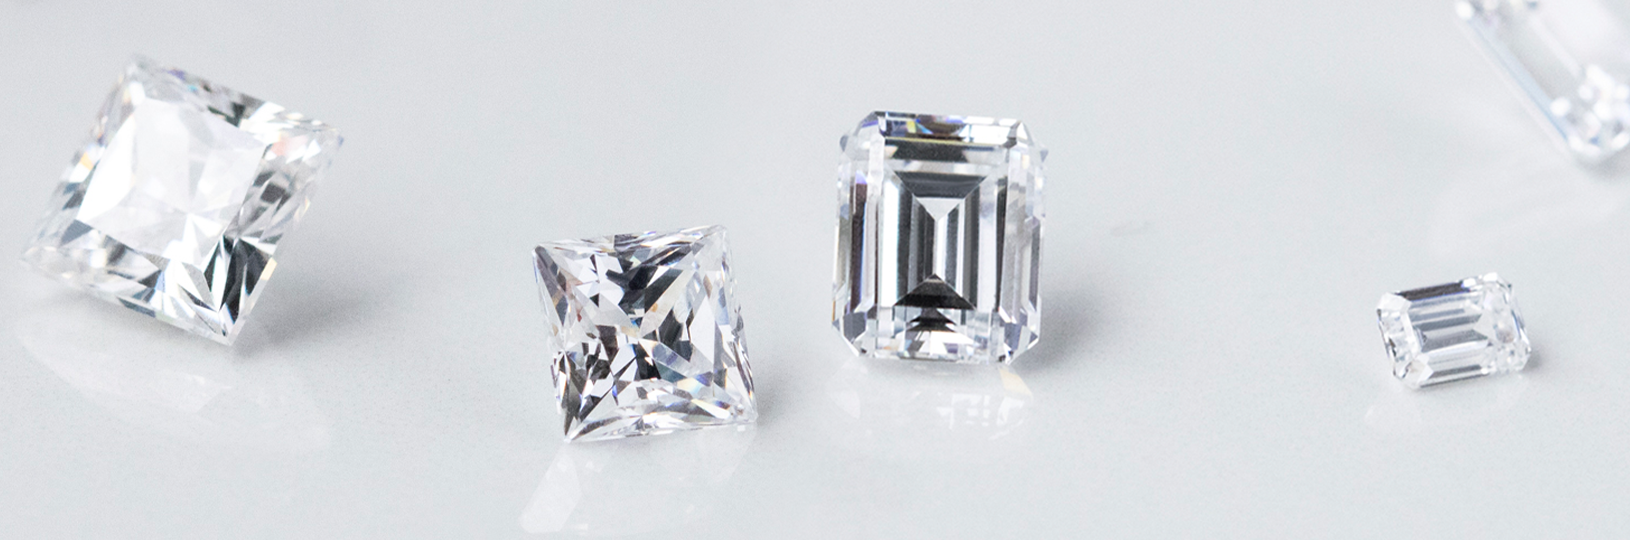 A variety of Nexus Diamond™ alternatives compared side by side